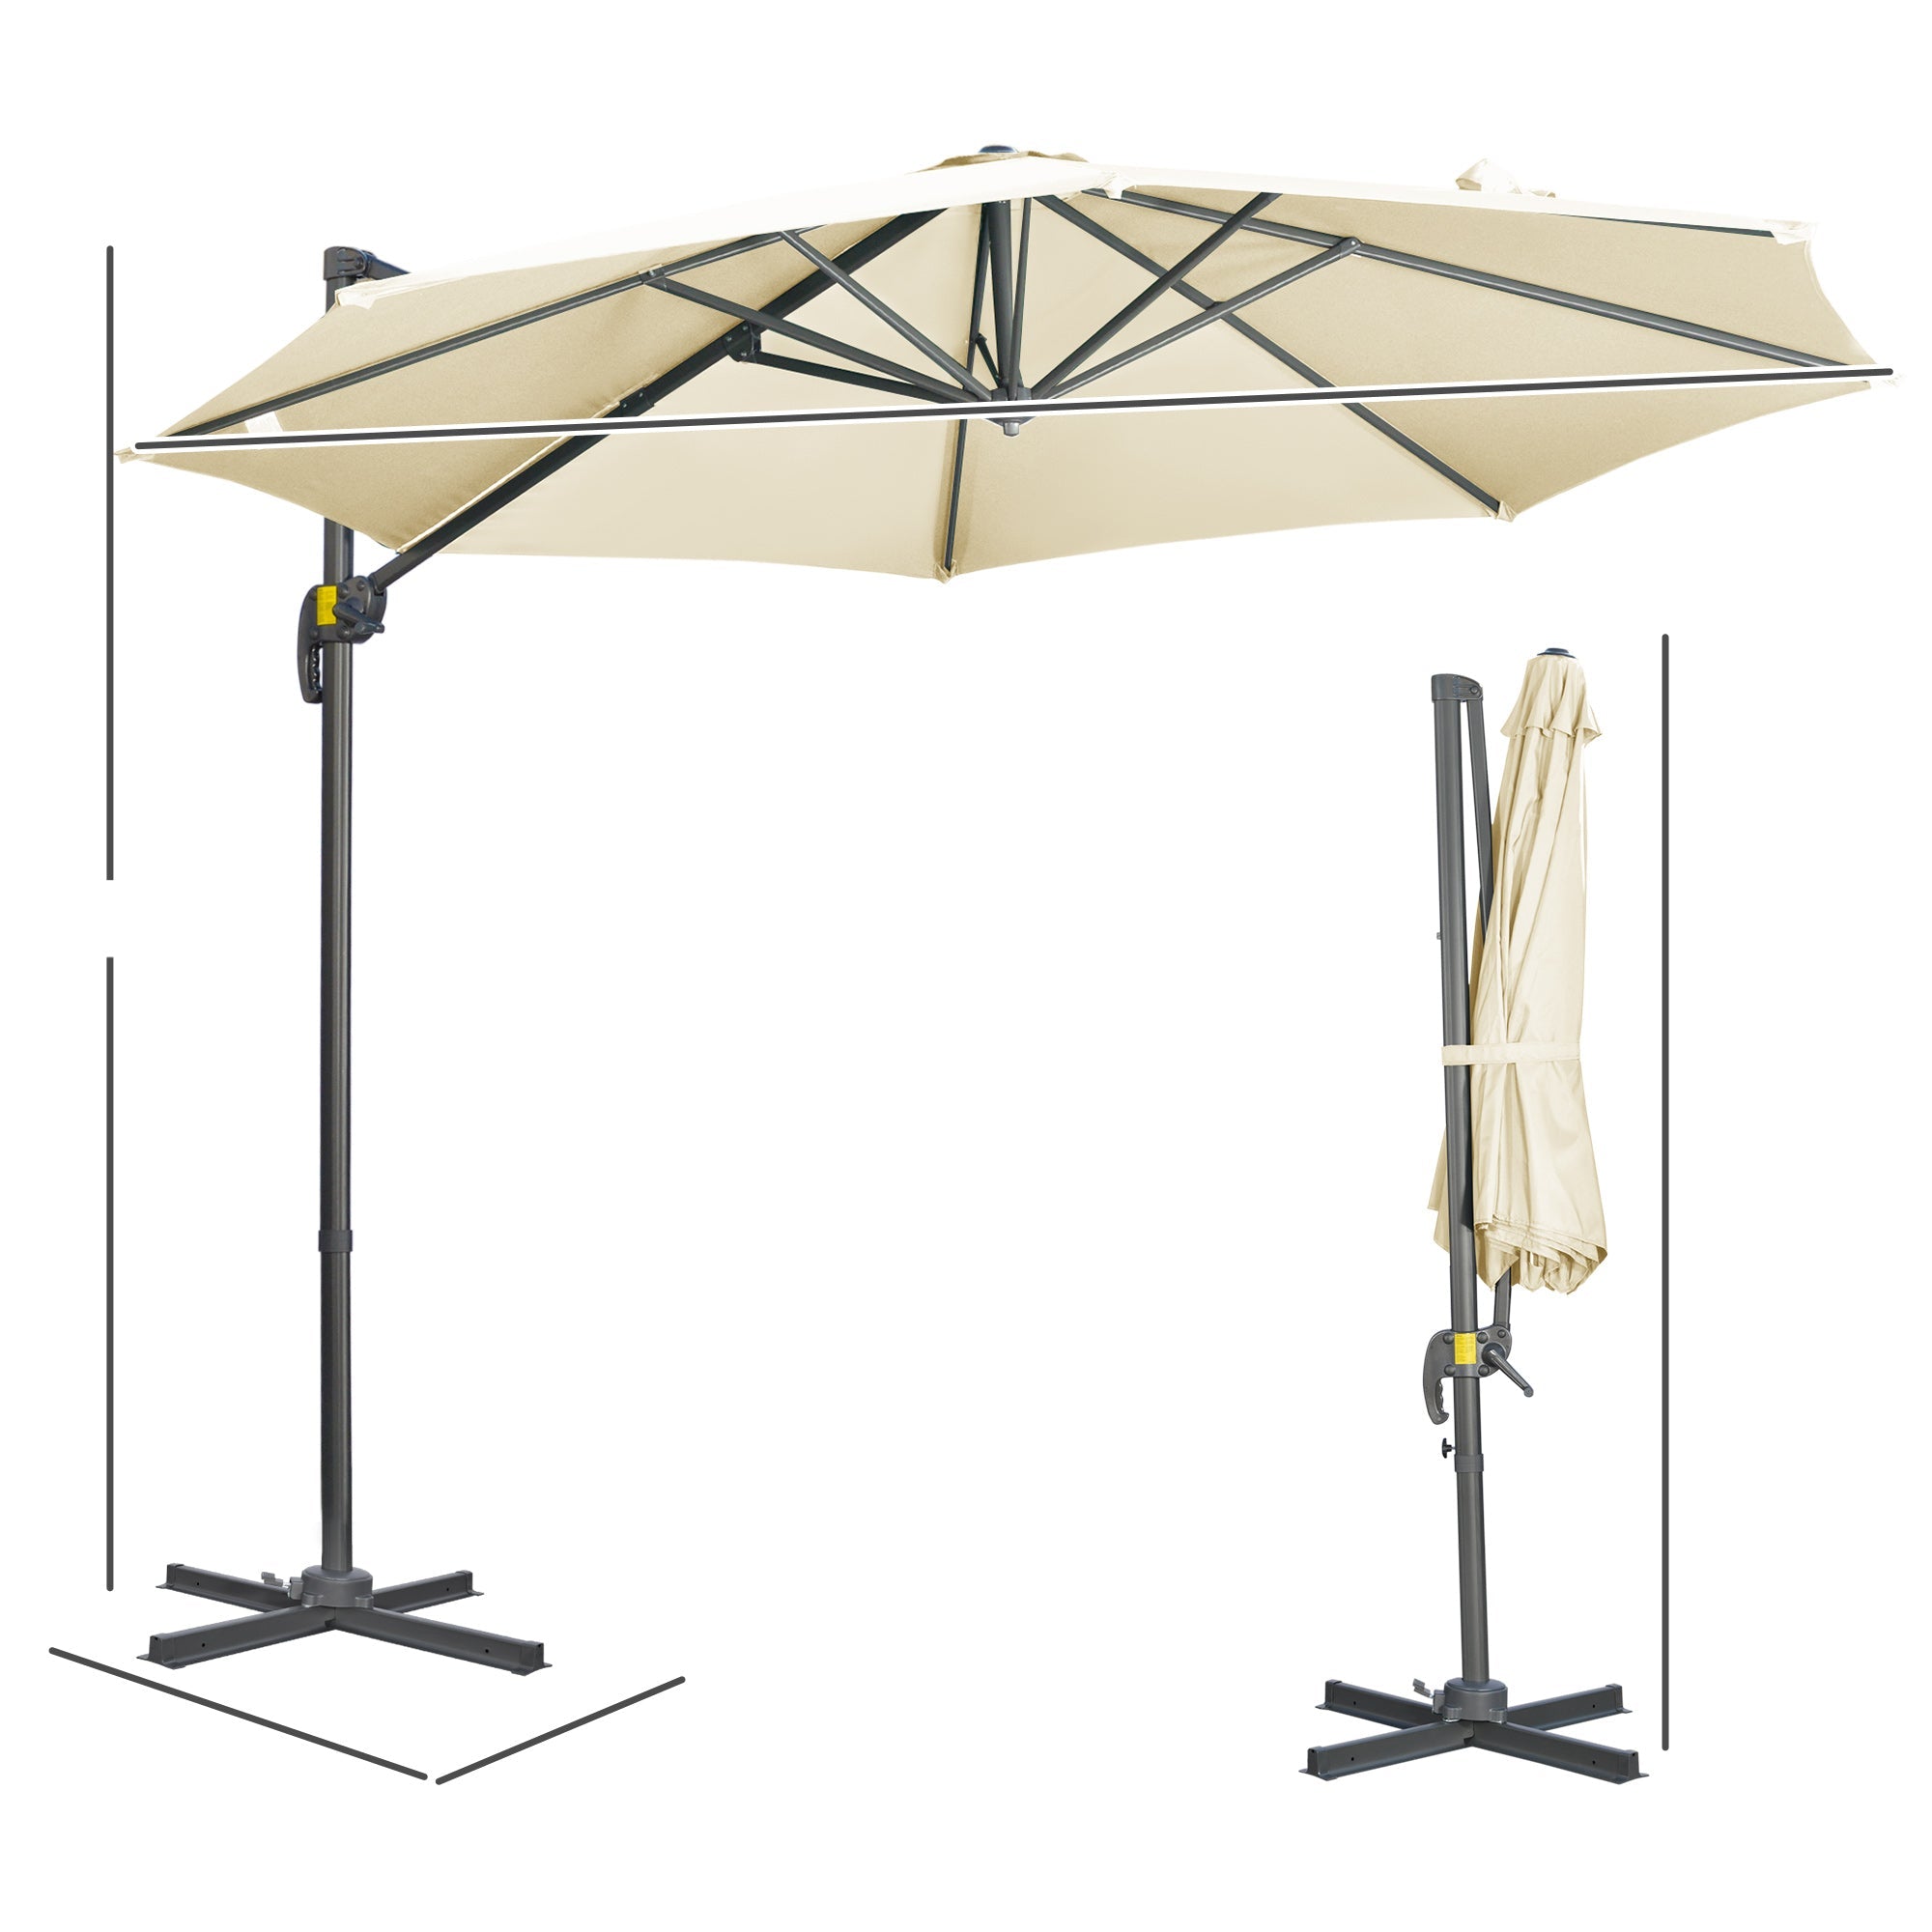 3 x 3(m) Cantilever Parasol with Cross Base, Garden Umbrella with 360° Rotation, Crank Handle and Tilt for Outdoor, Patio, Cream White-2